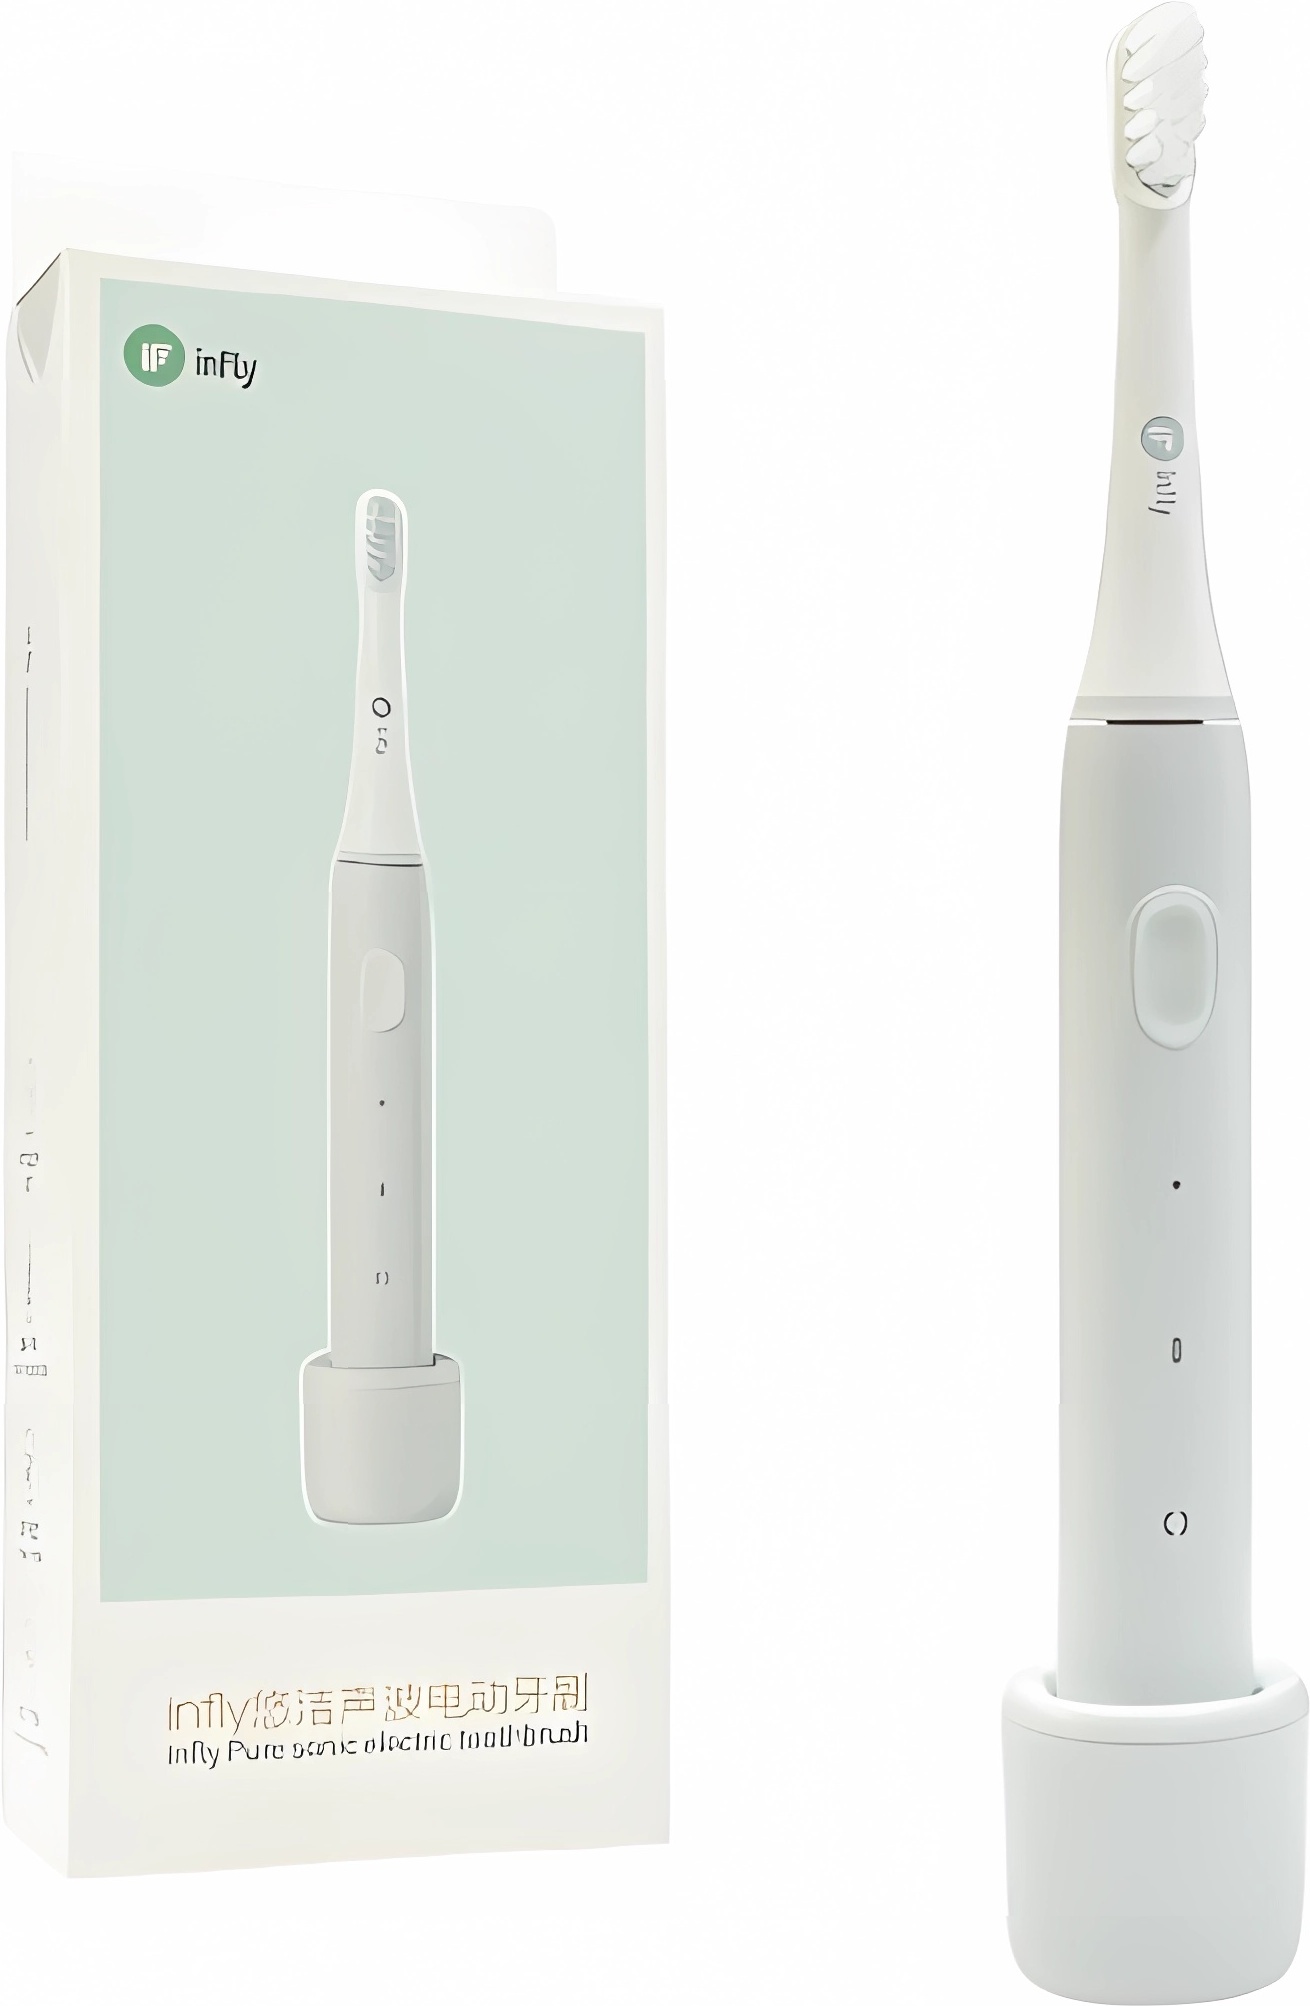 Электрическая зубная щетка Infly Electric Toothbrush P60 серый электрическая зубная щетка infly electric toothbrush p60 серый